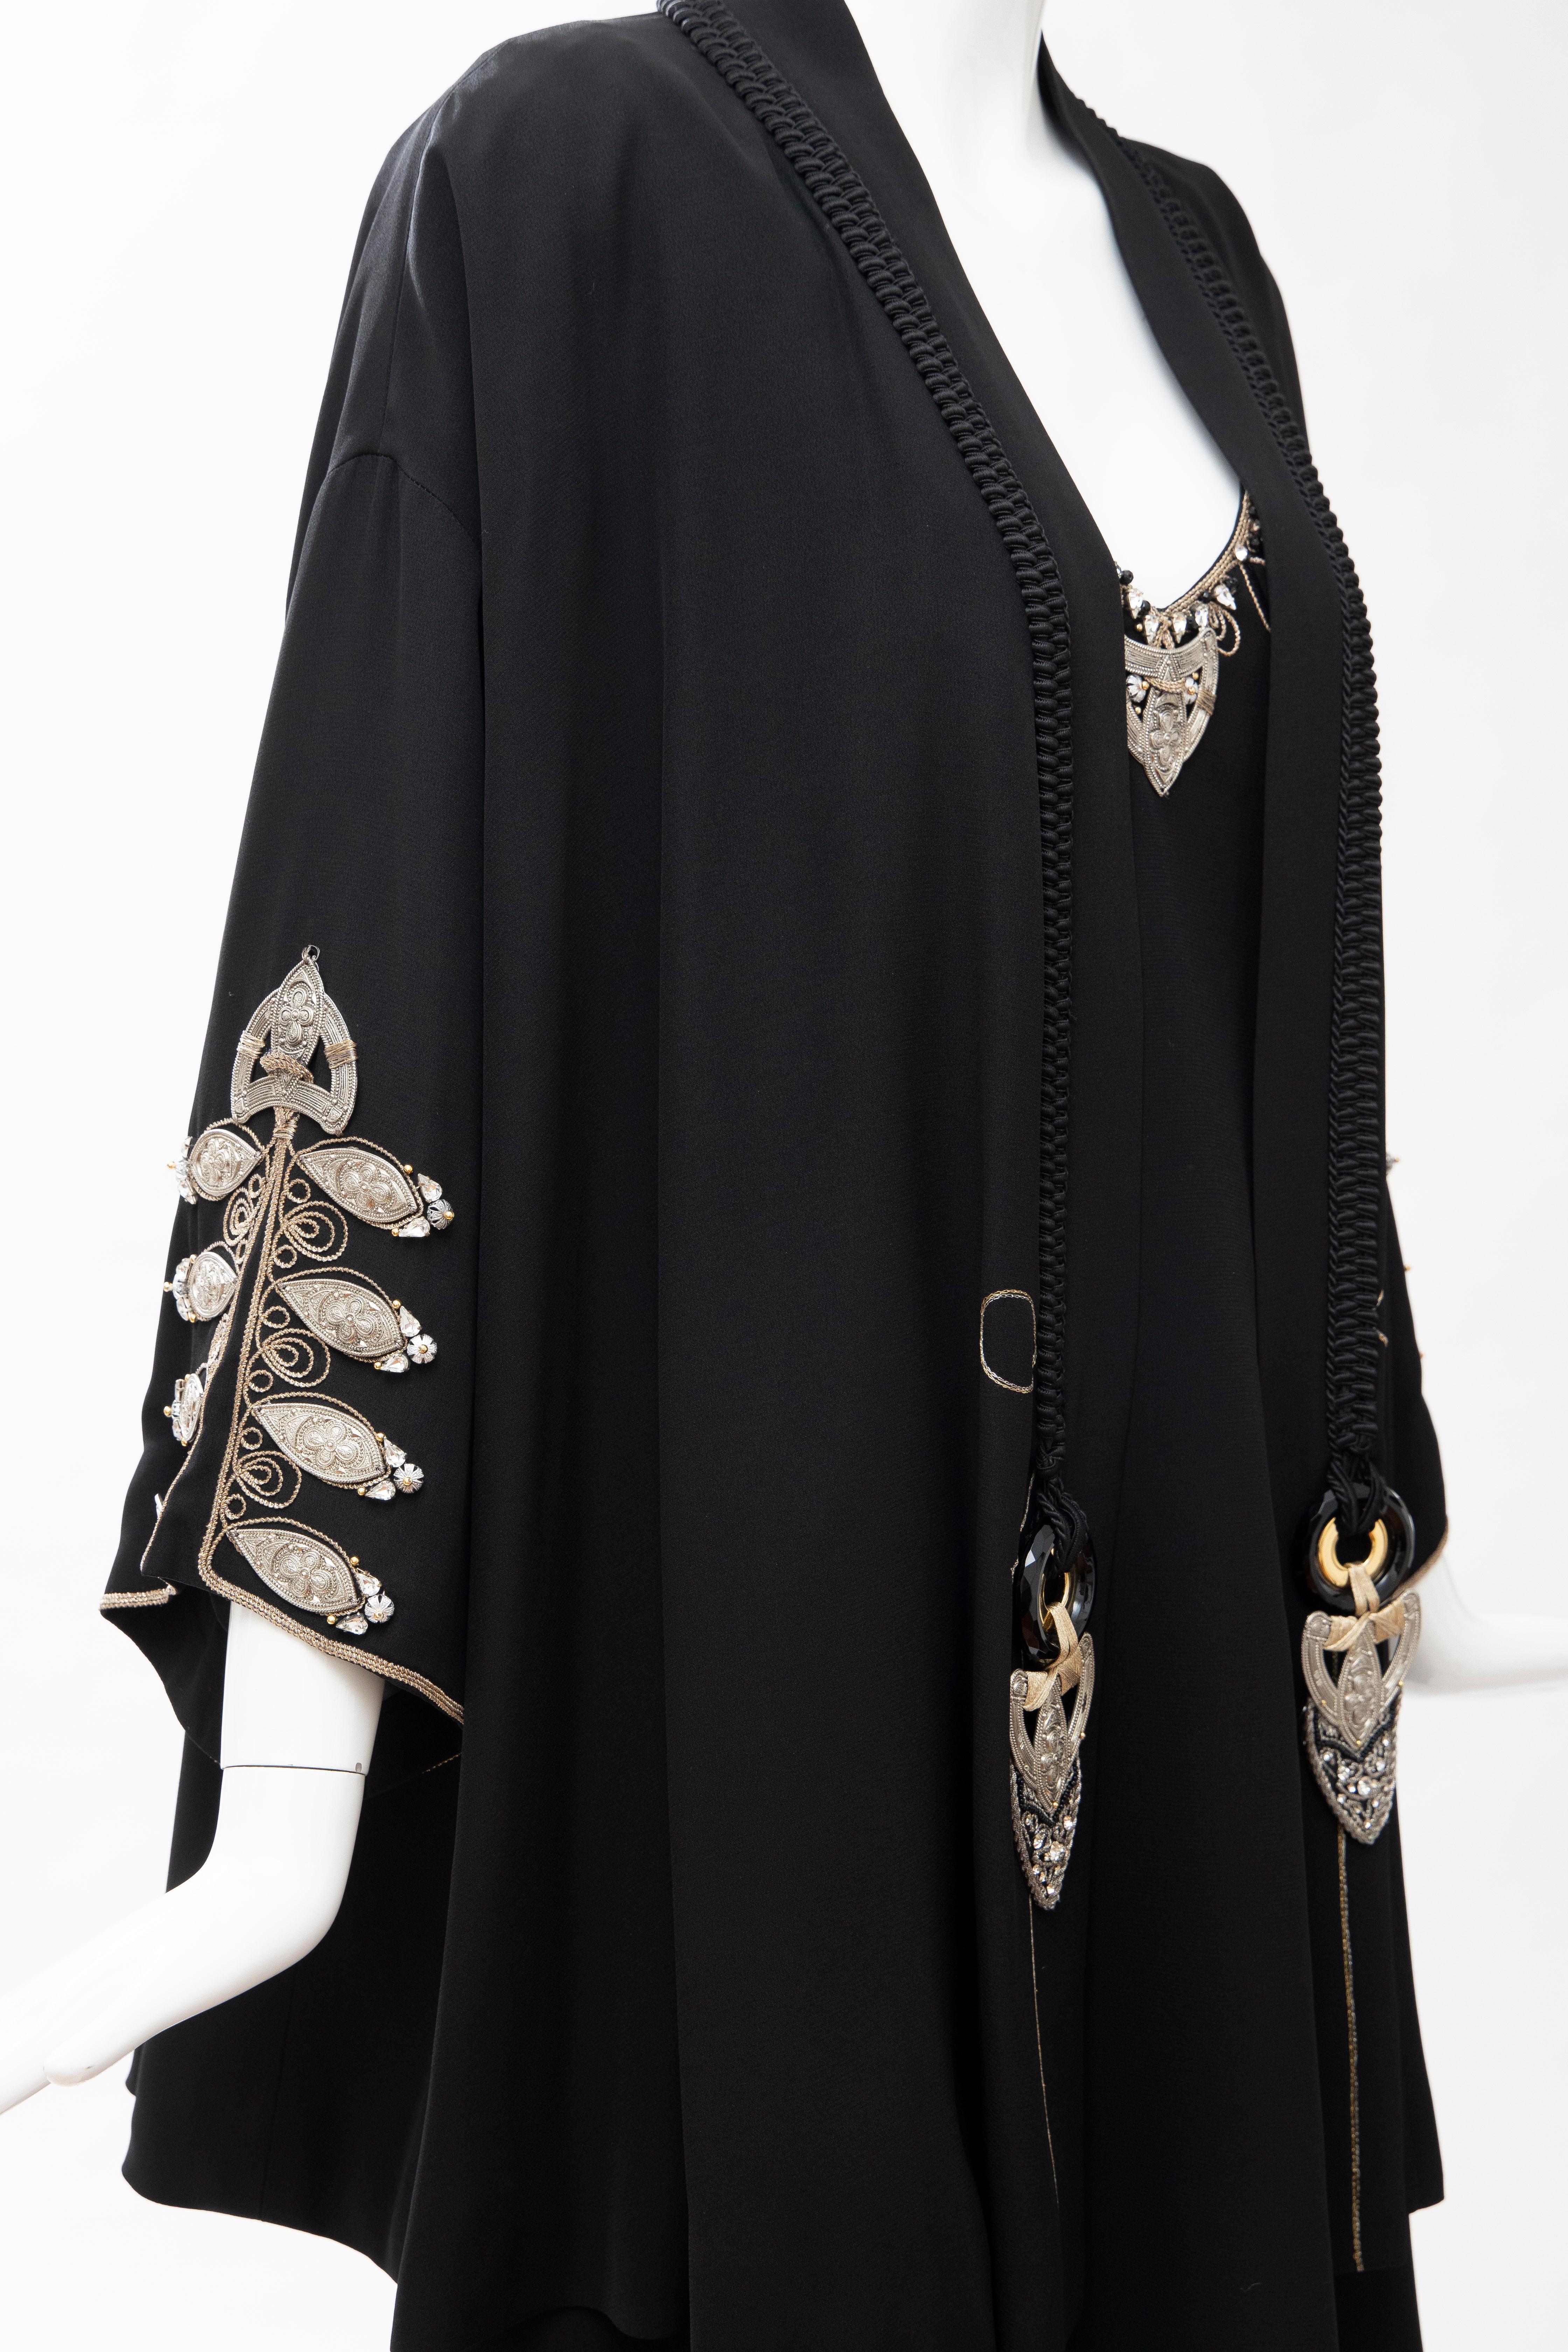 Women's Christian Dior Gianfranco Ferré Numbered Black Embroidered Dress Ensemble, 1991